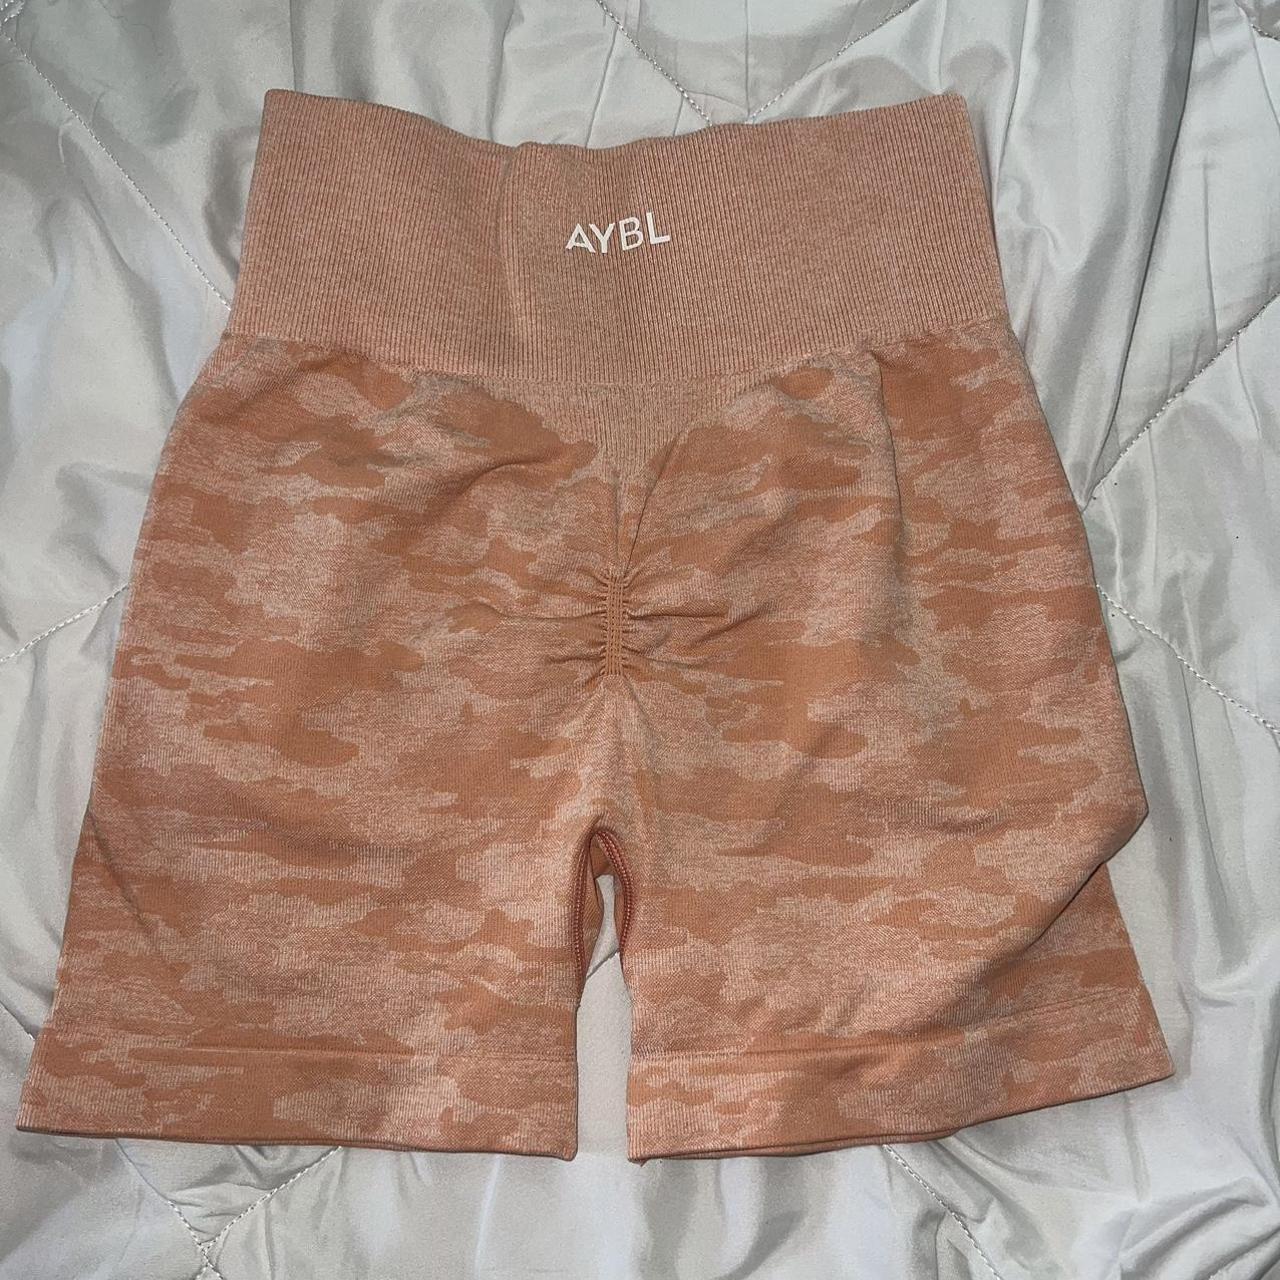 AYBL Evolve Camo Seamless Shorts